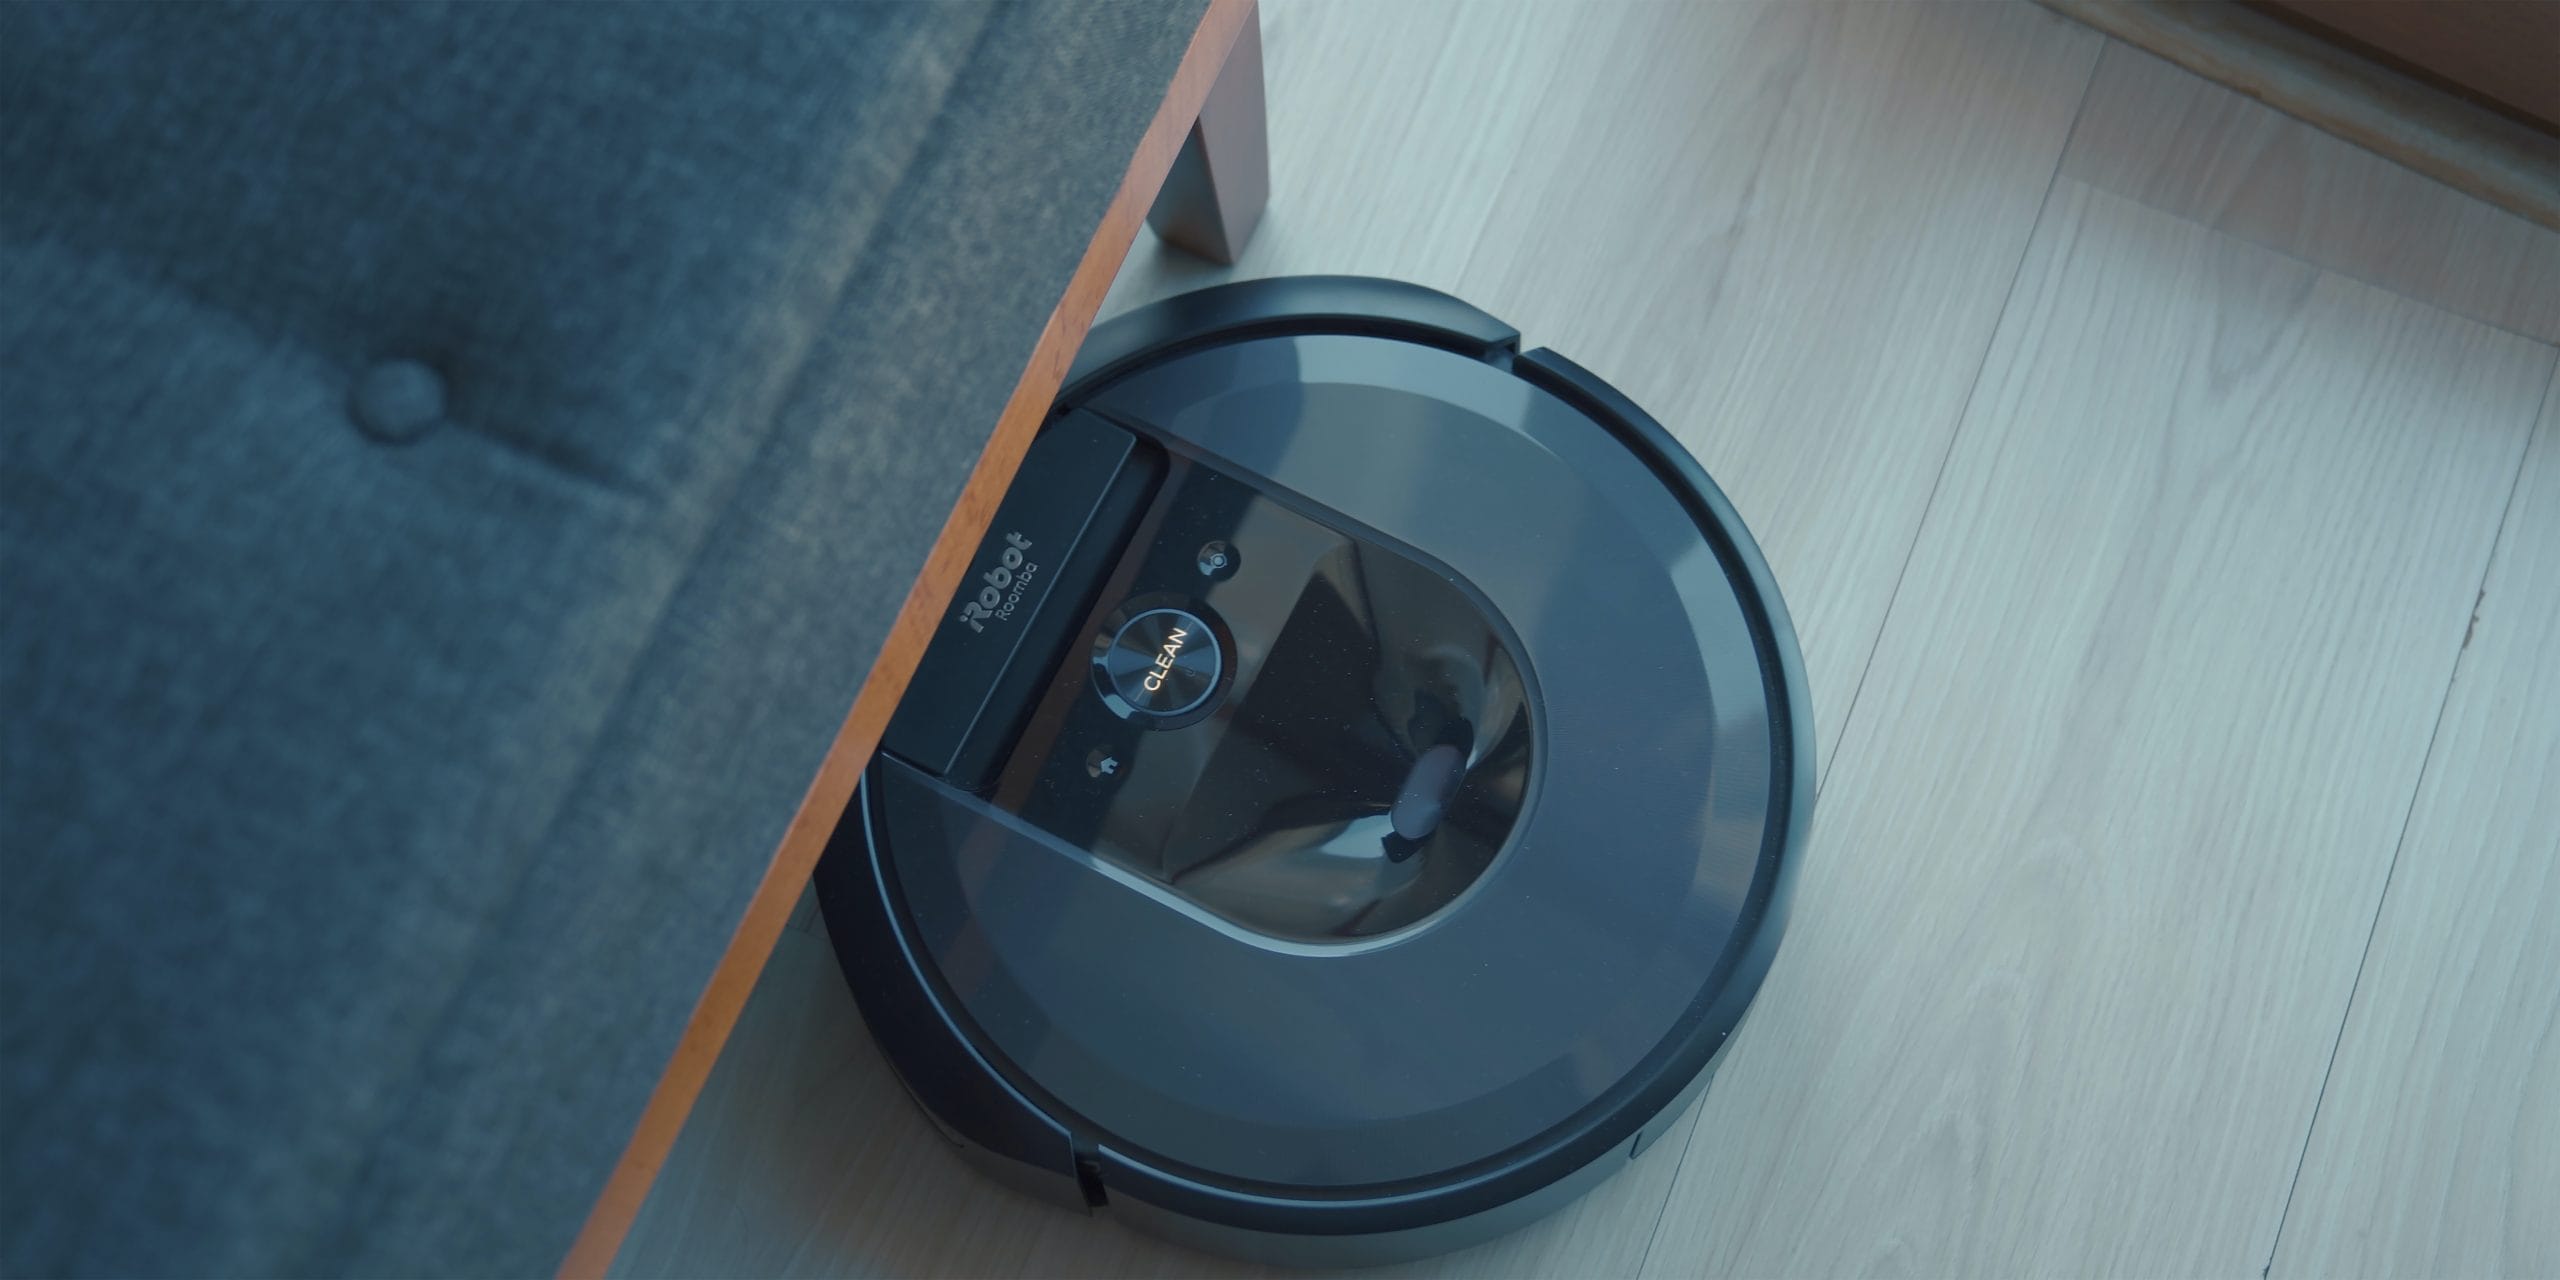 Roomba robot vacuum cleaner